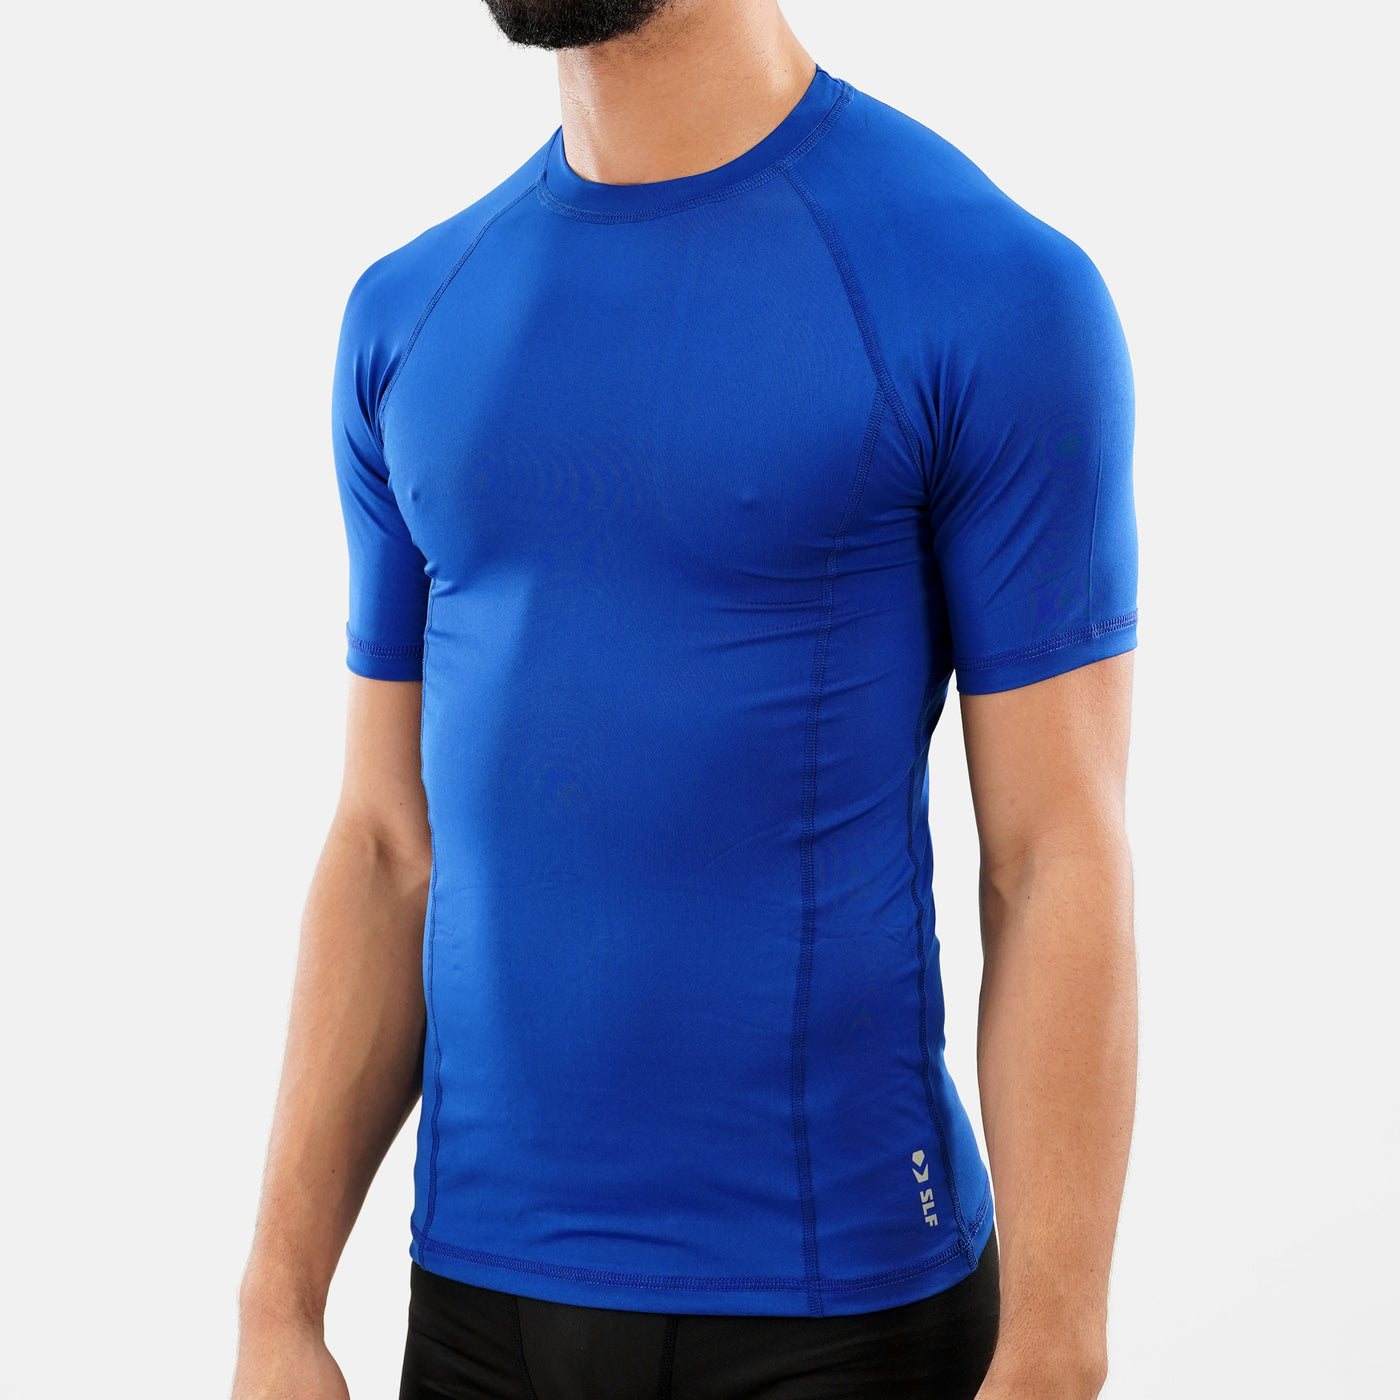 Cobalt Blue Compression Shirt